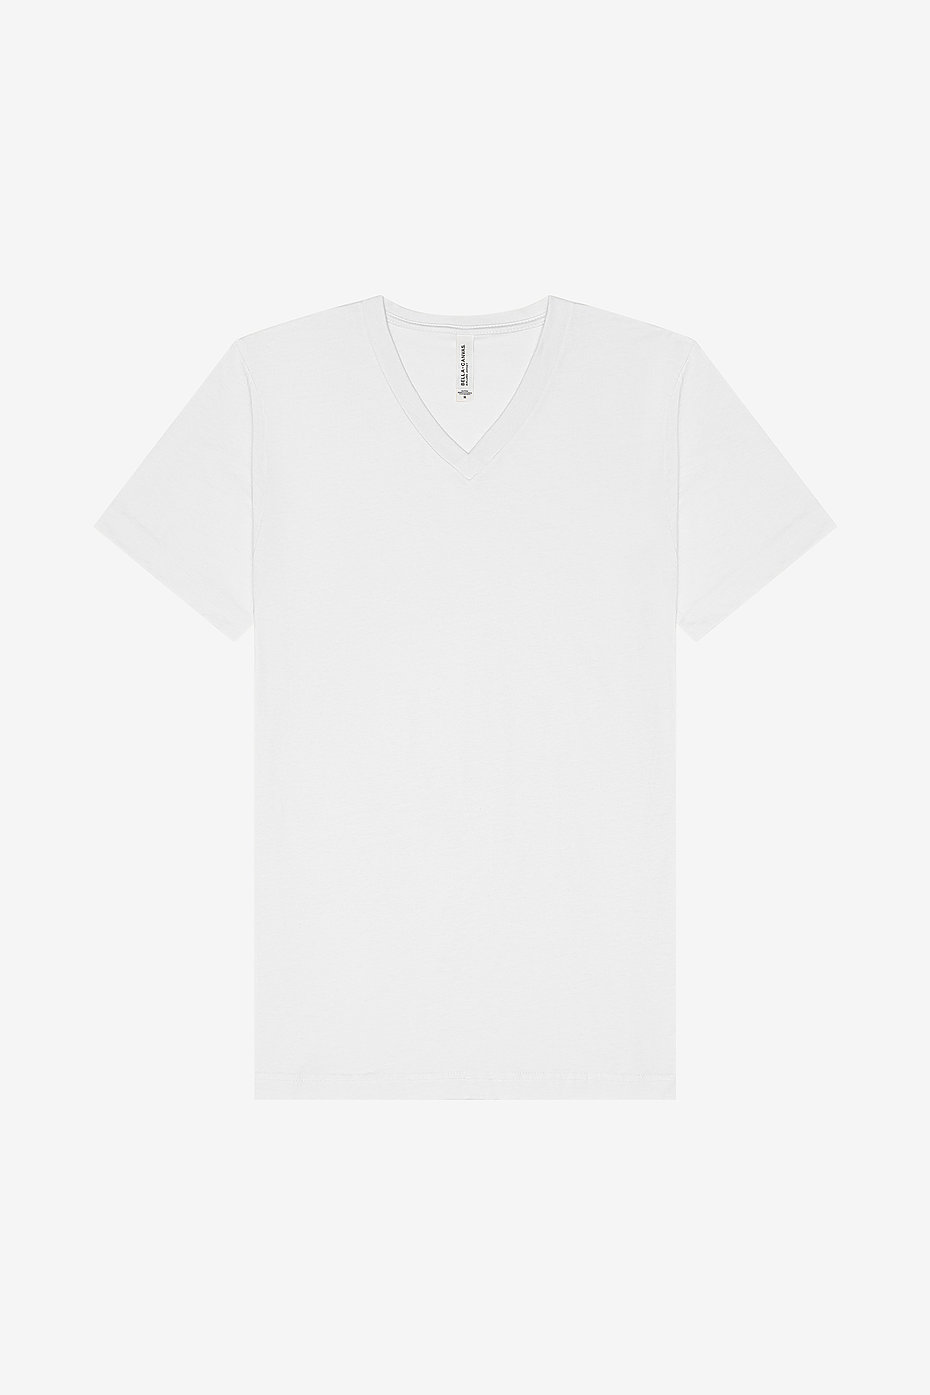 Unisex V-Neck White T-Shirt